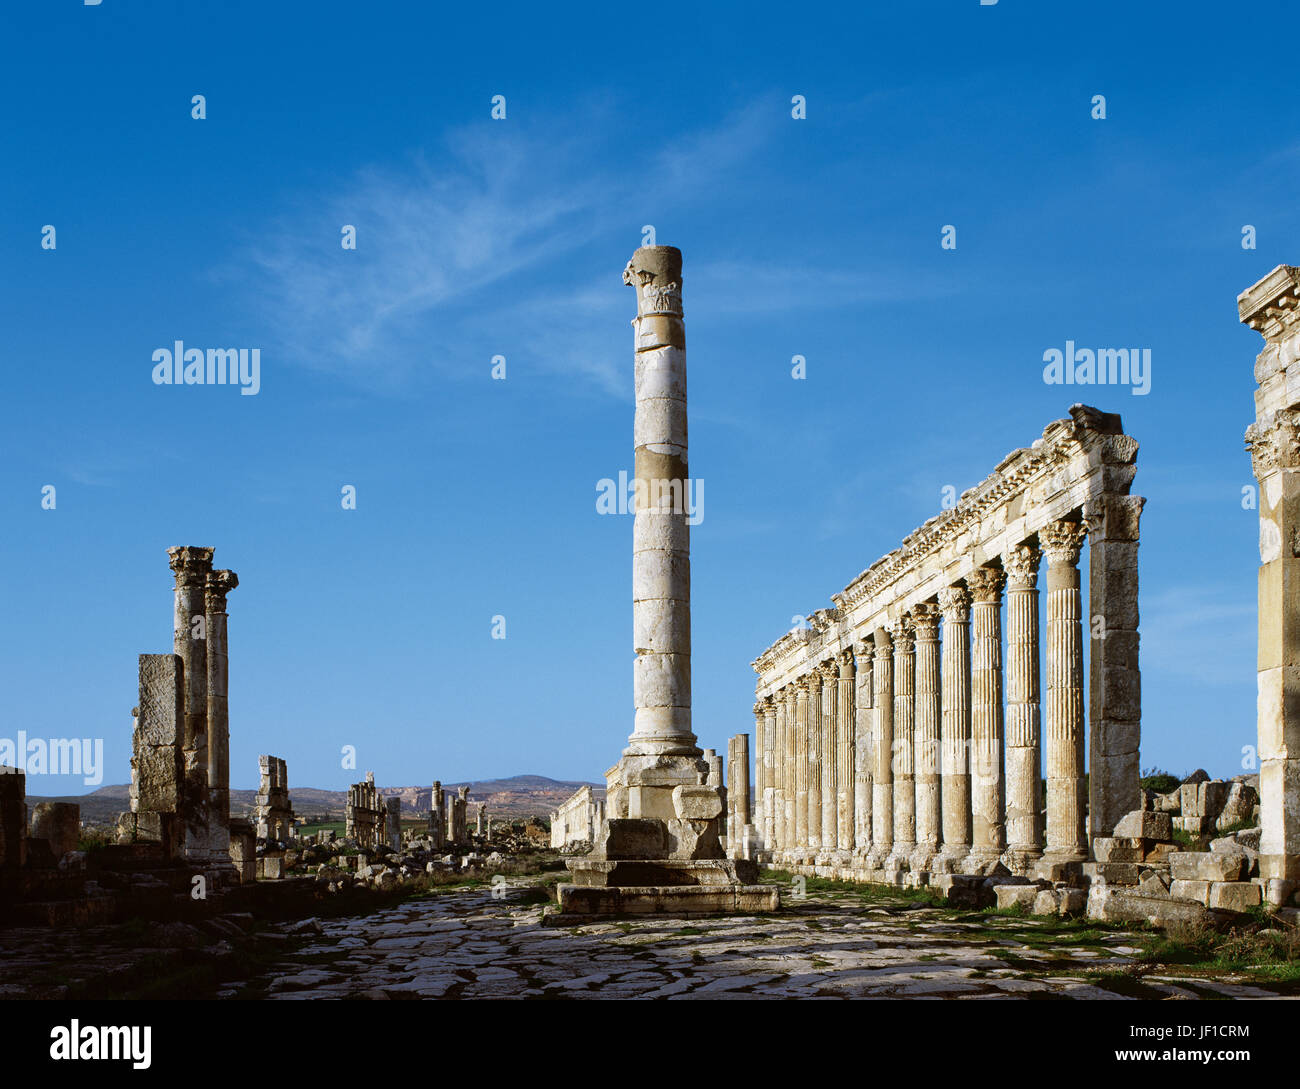 Syria. Apamea. Votive column in the Cardo Maximus. Roman work, 2nd century. Photo taken before civil war. Stock Photo